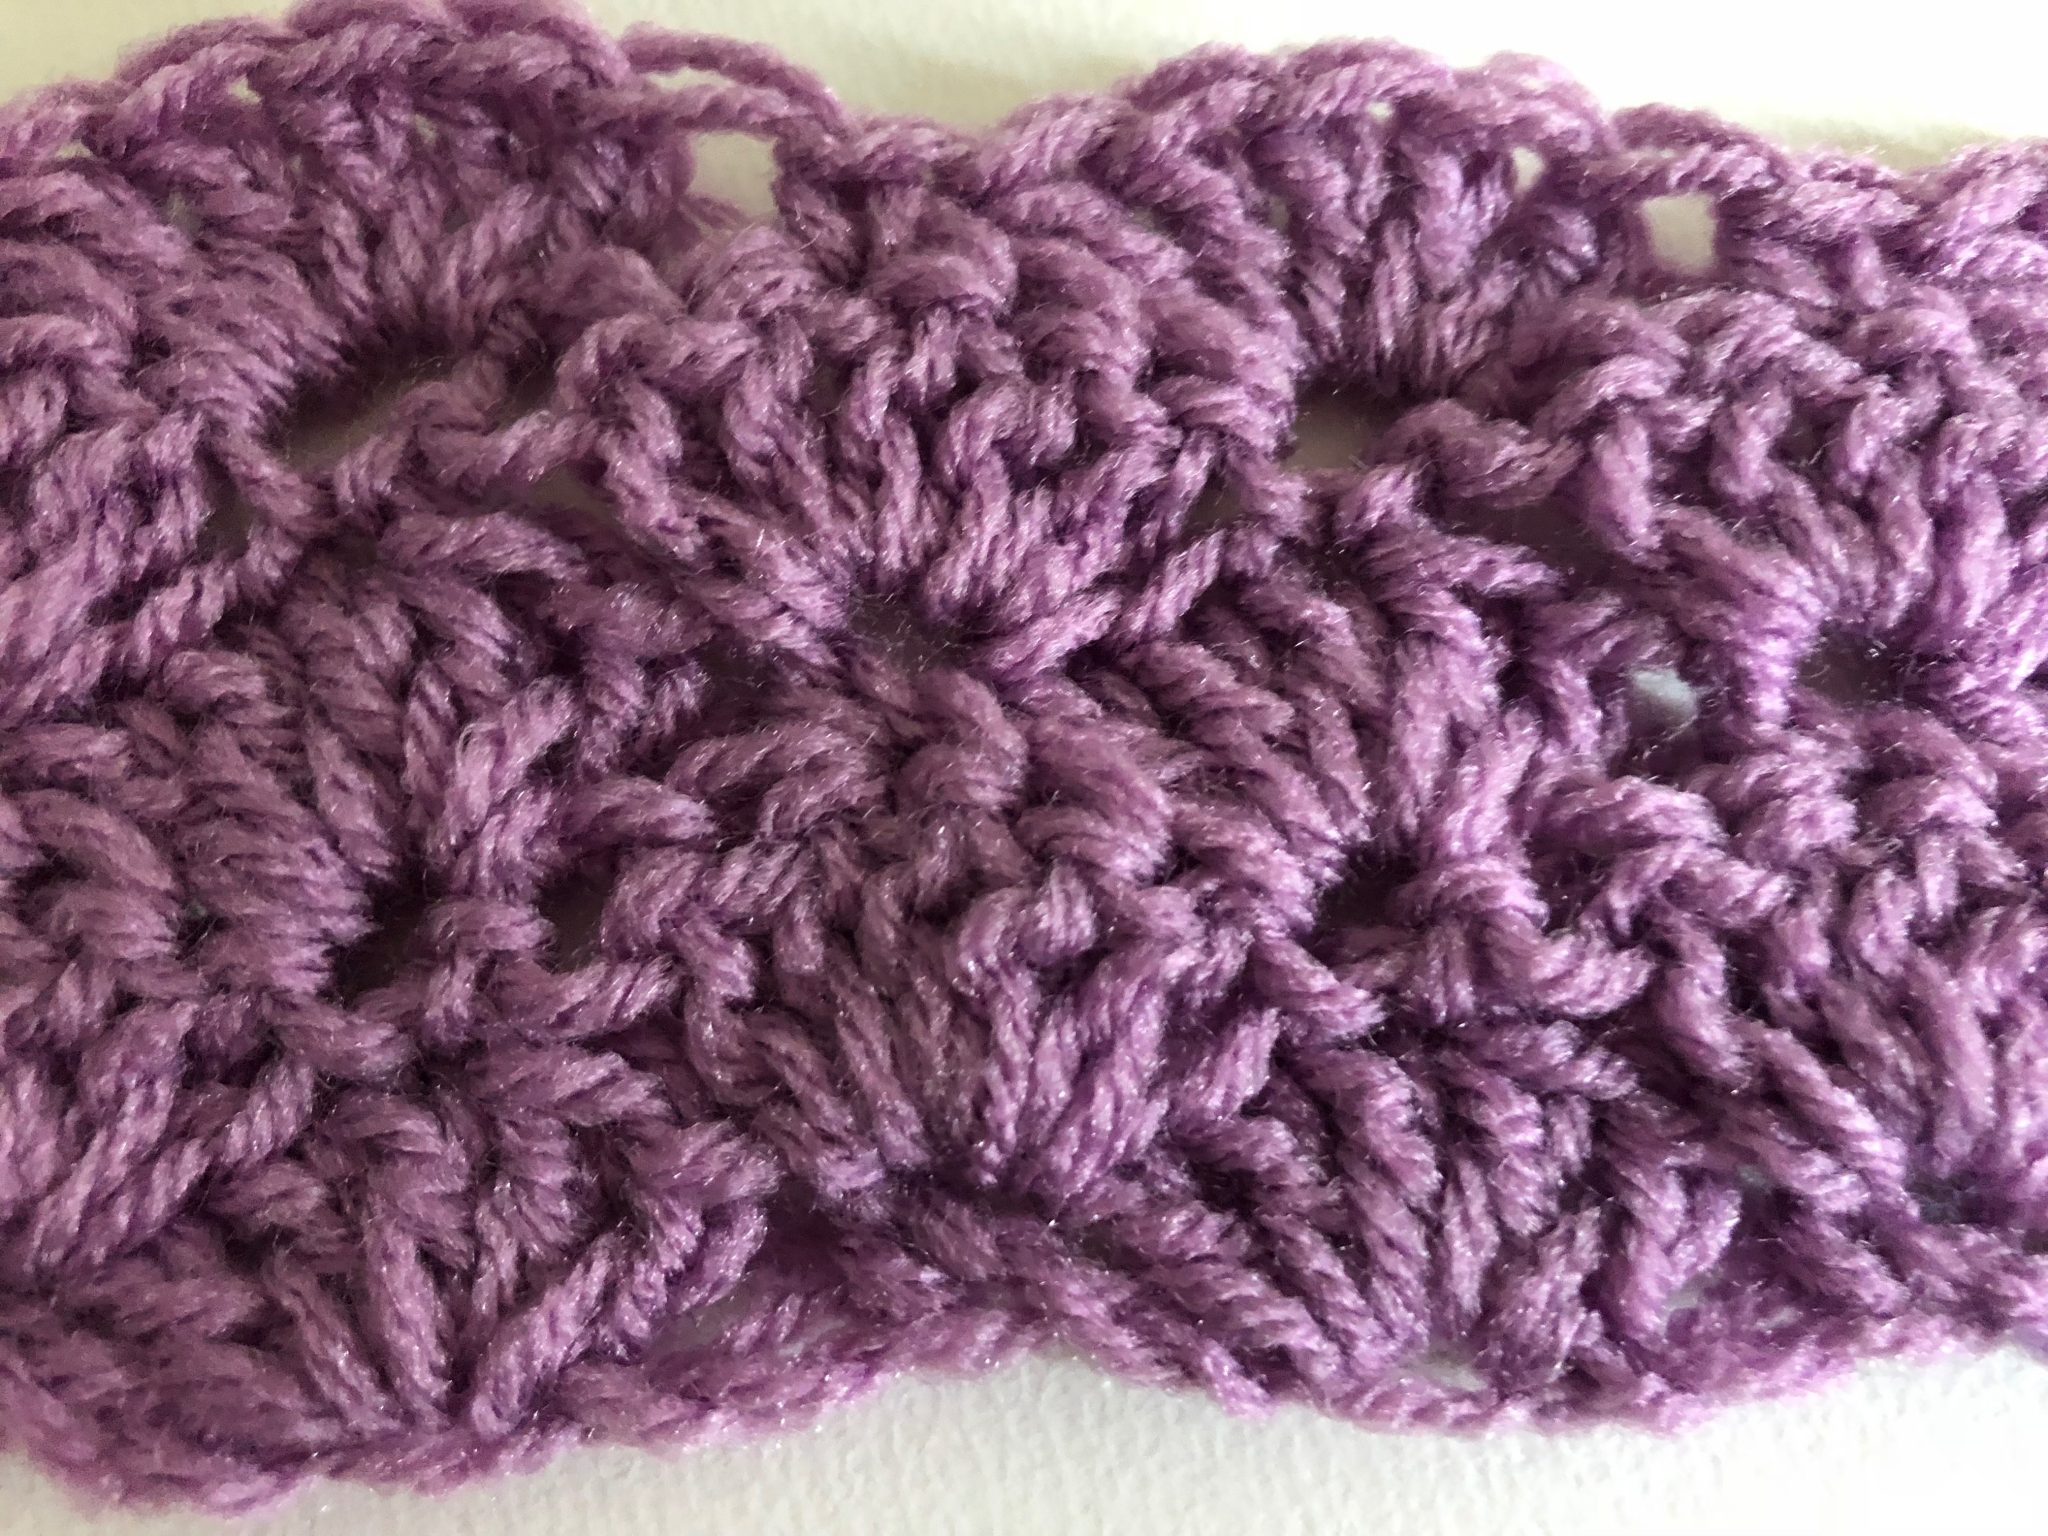 Crochet Shell Stitch Pattern How To Crochet Shell Stitch Crochet Patterns How To Stitches